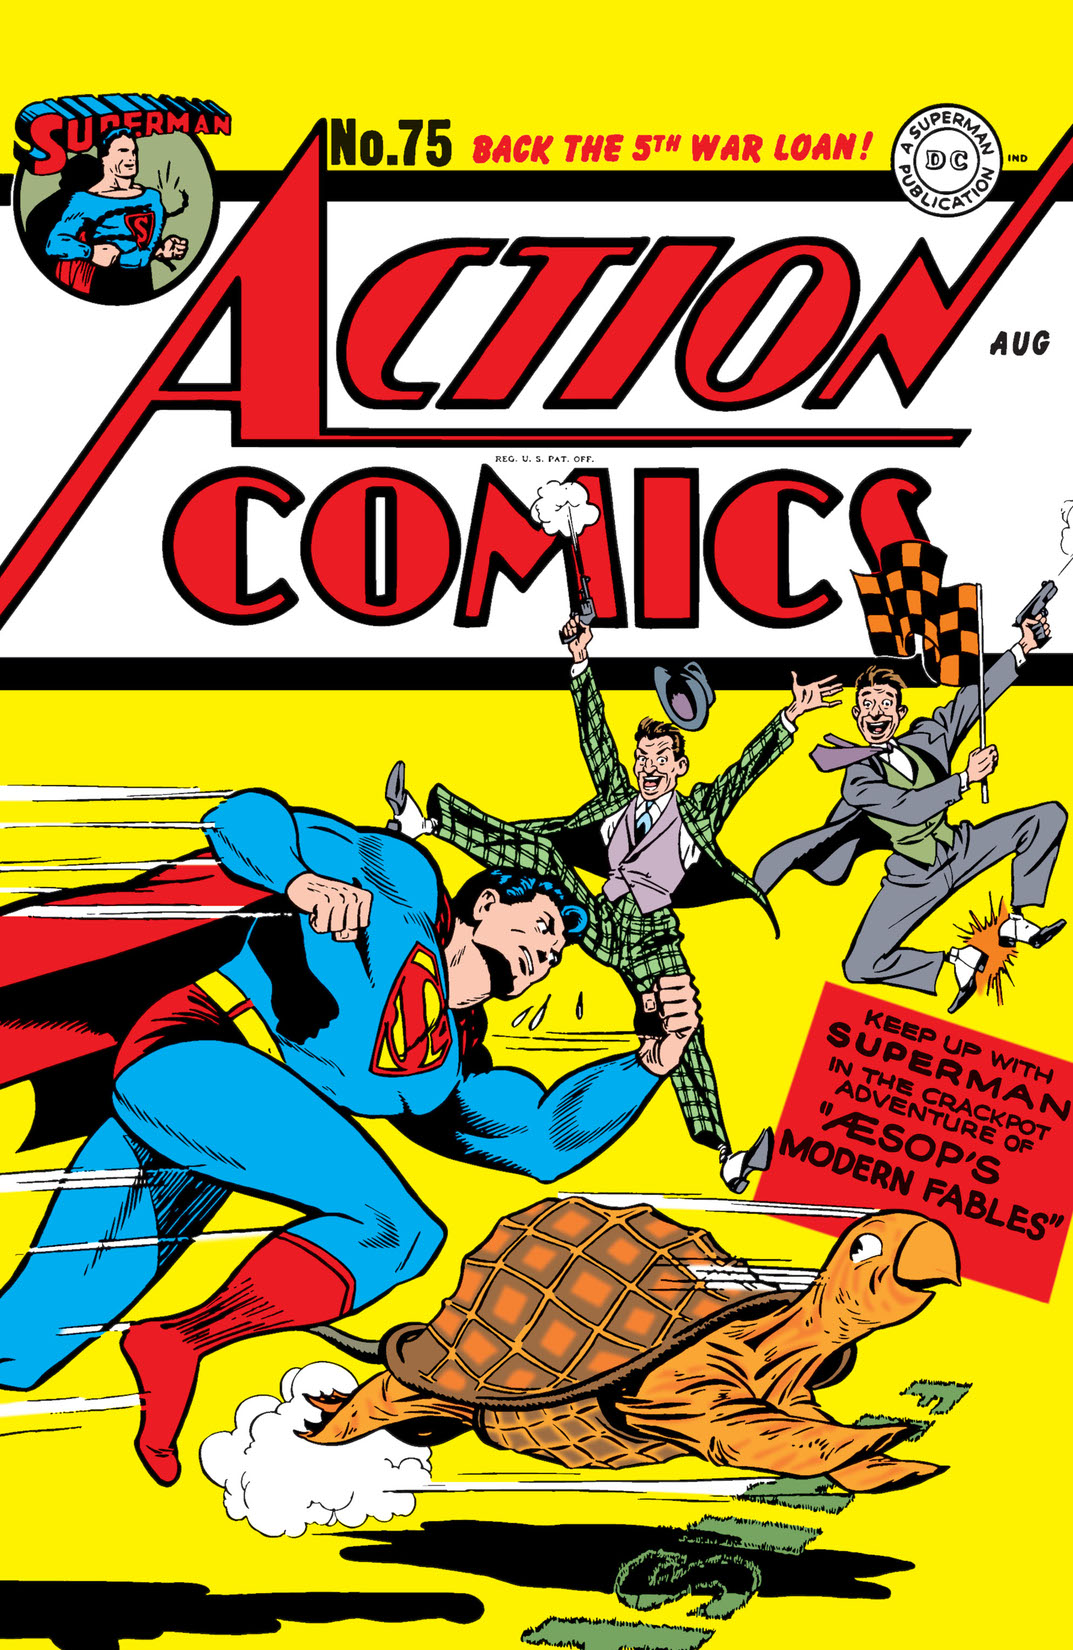 Action Comics (1938-) #75 preview images